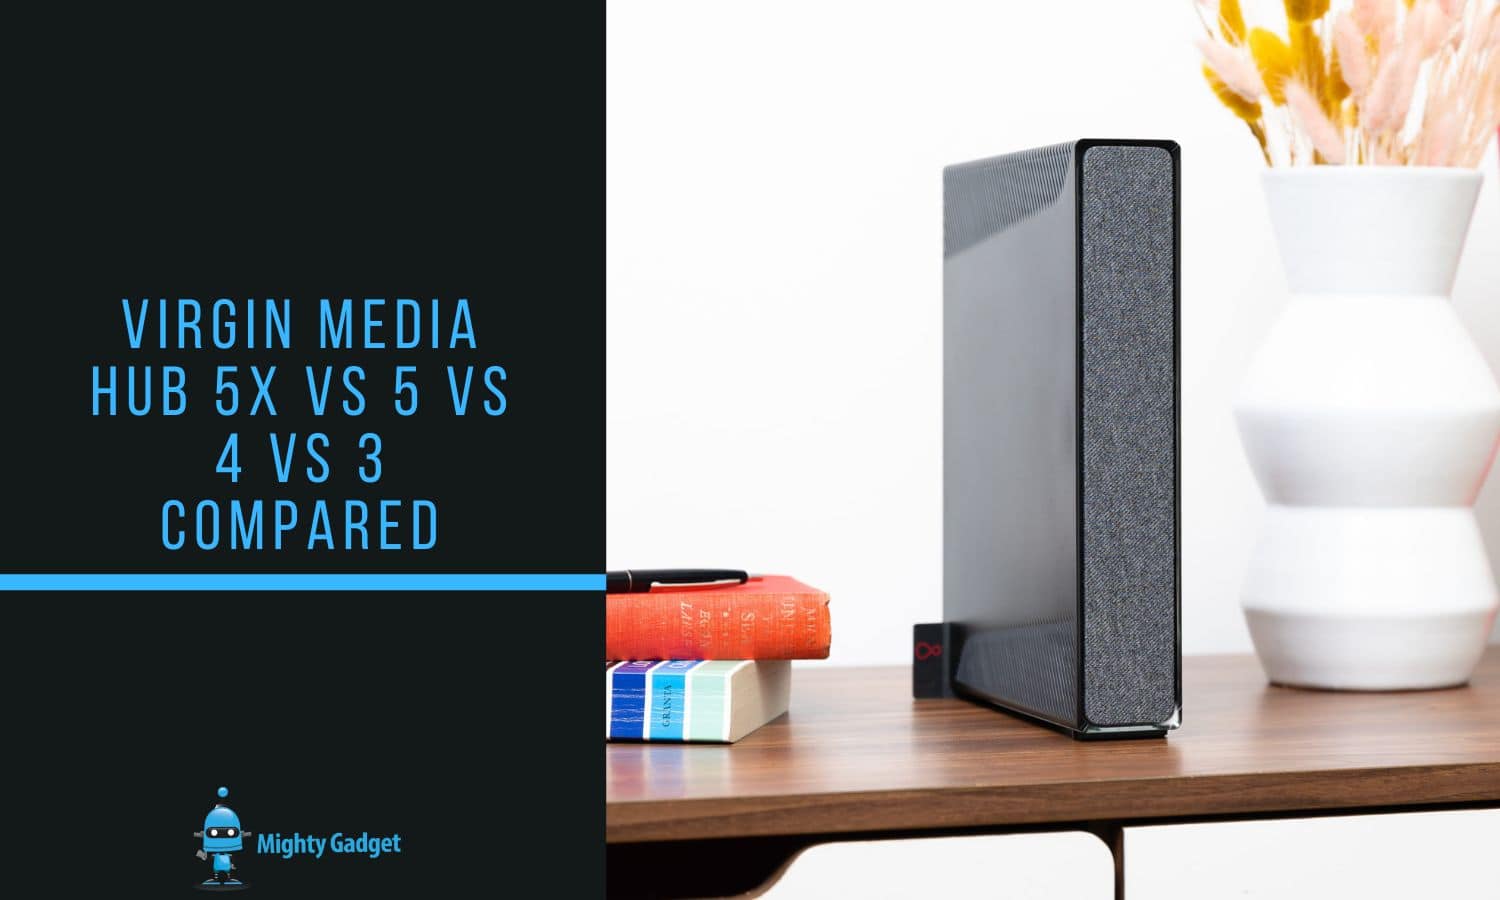 Virgin Media Hub 5x vs 5 vs 4 vs 3 Compared – What’s different between the Hub 5x & 5